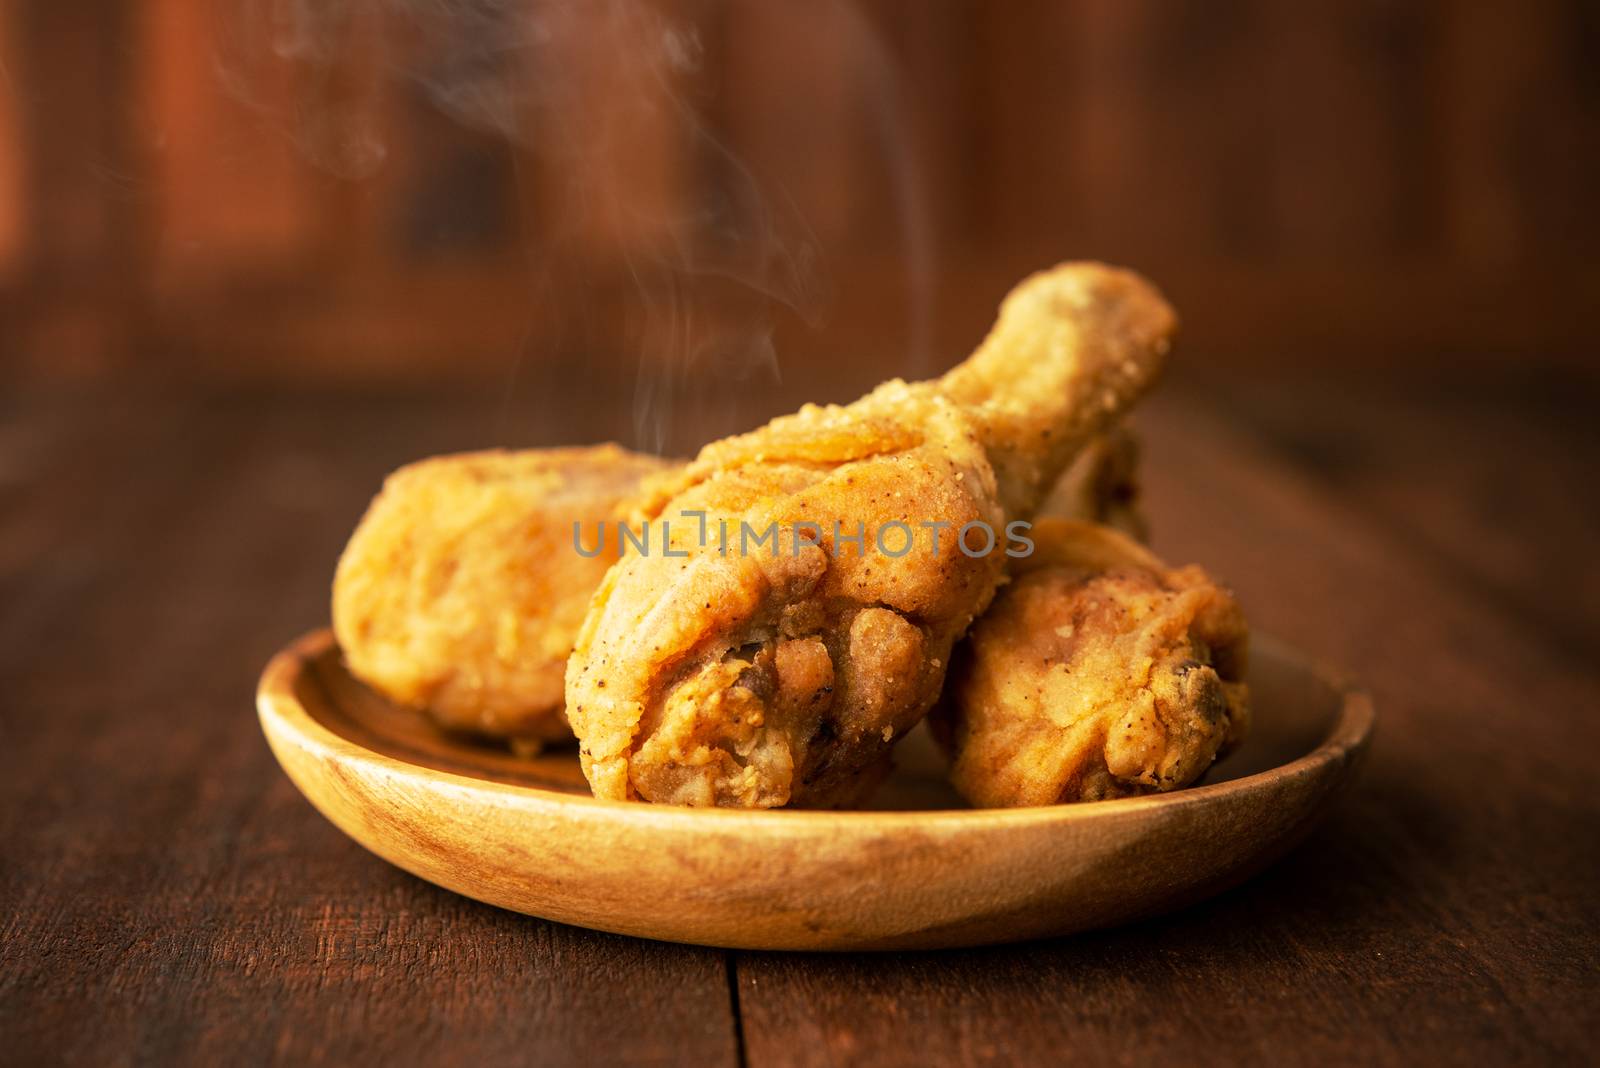 Plate of original recipe fried chickens, on dark wooden background.